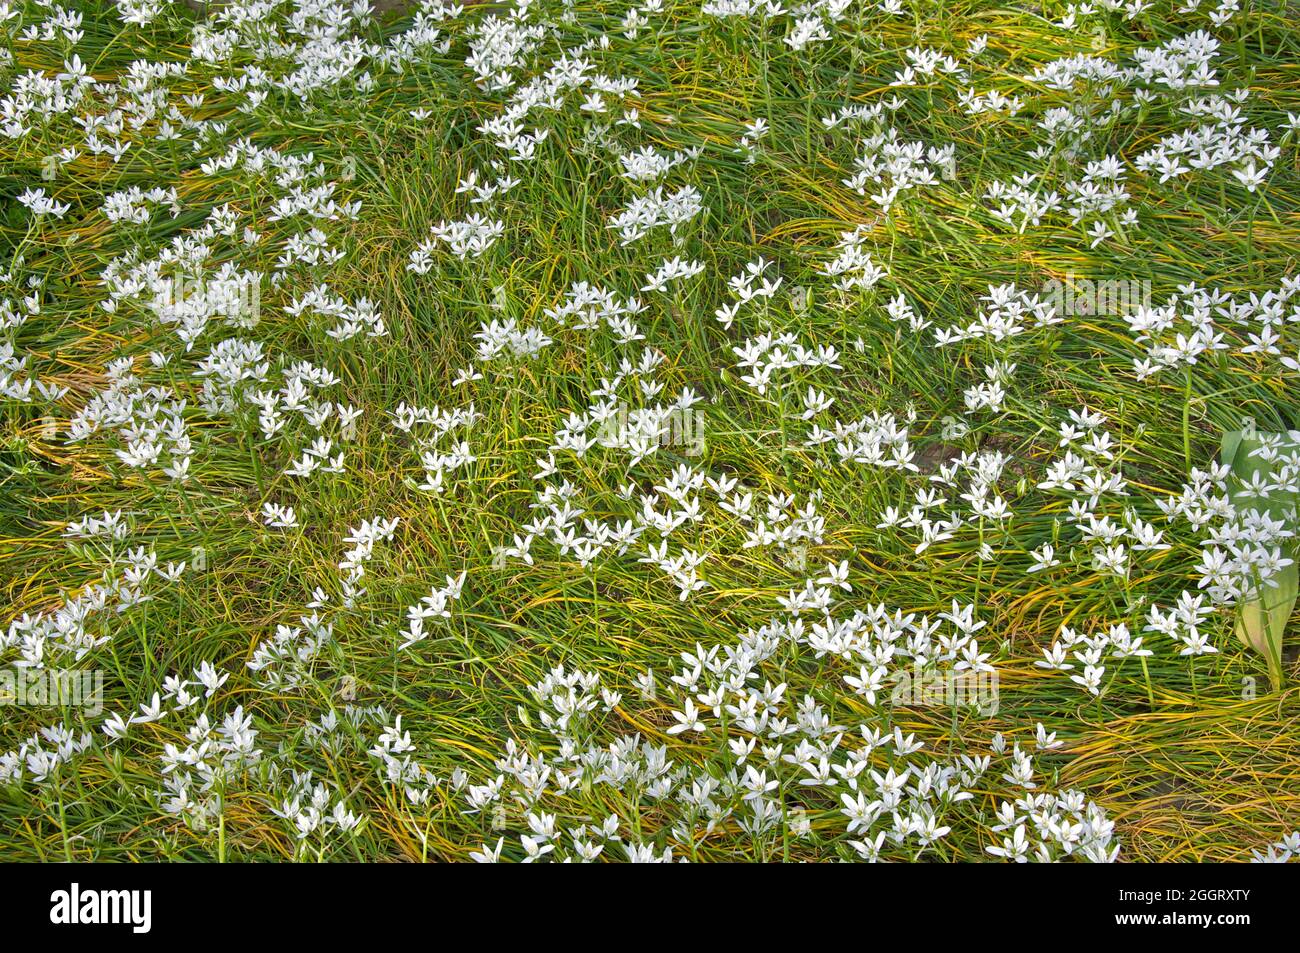 Scenics - nature of wildflowers in springtime Stock Photo